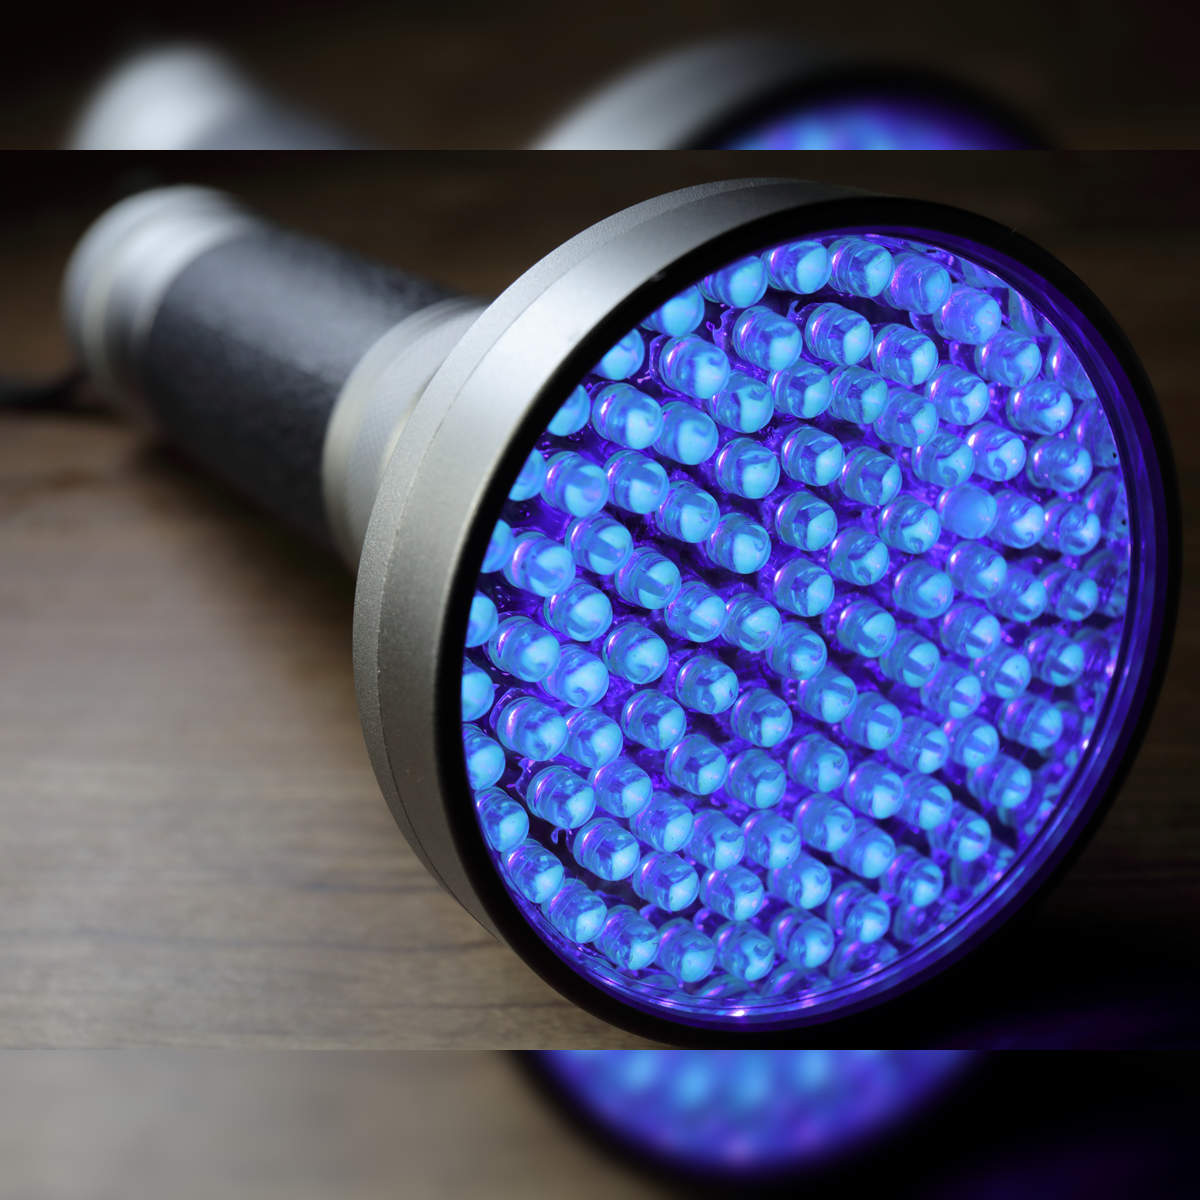 UV light: Corona care: UV LEDs can disinfect surfaces, reduce